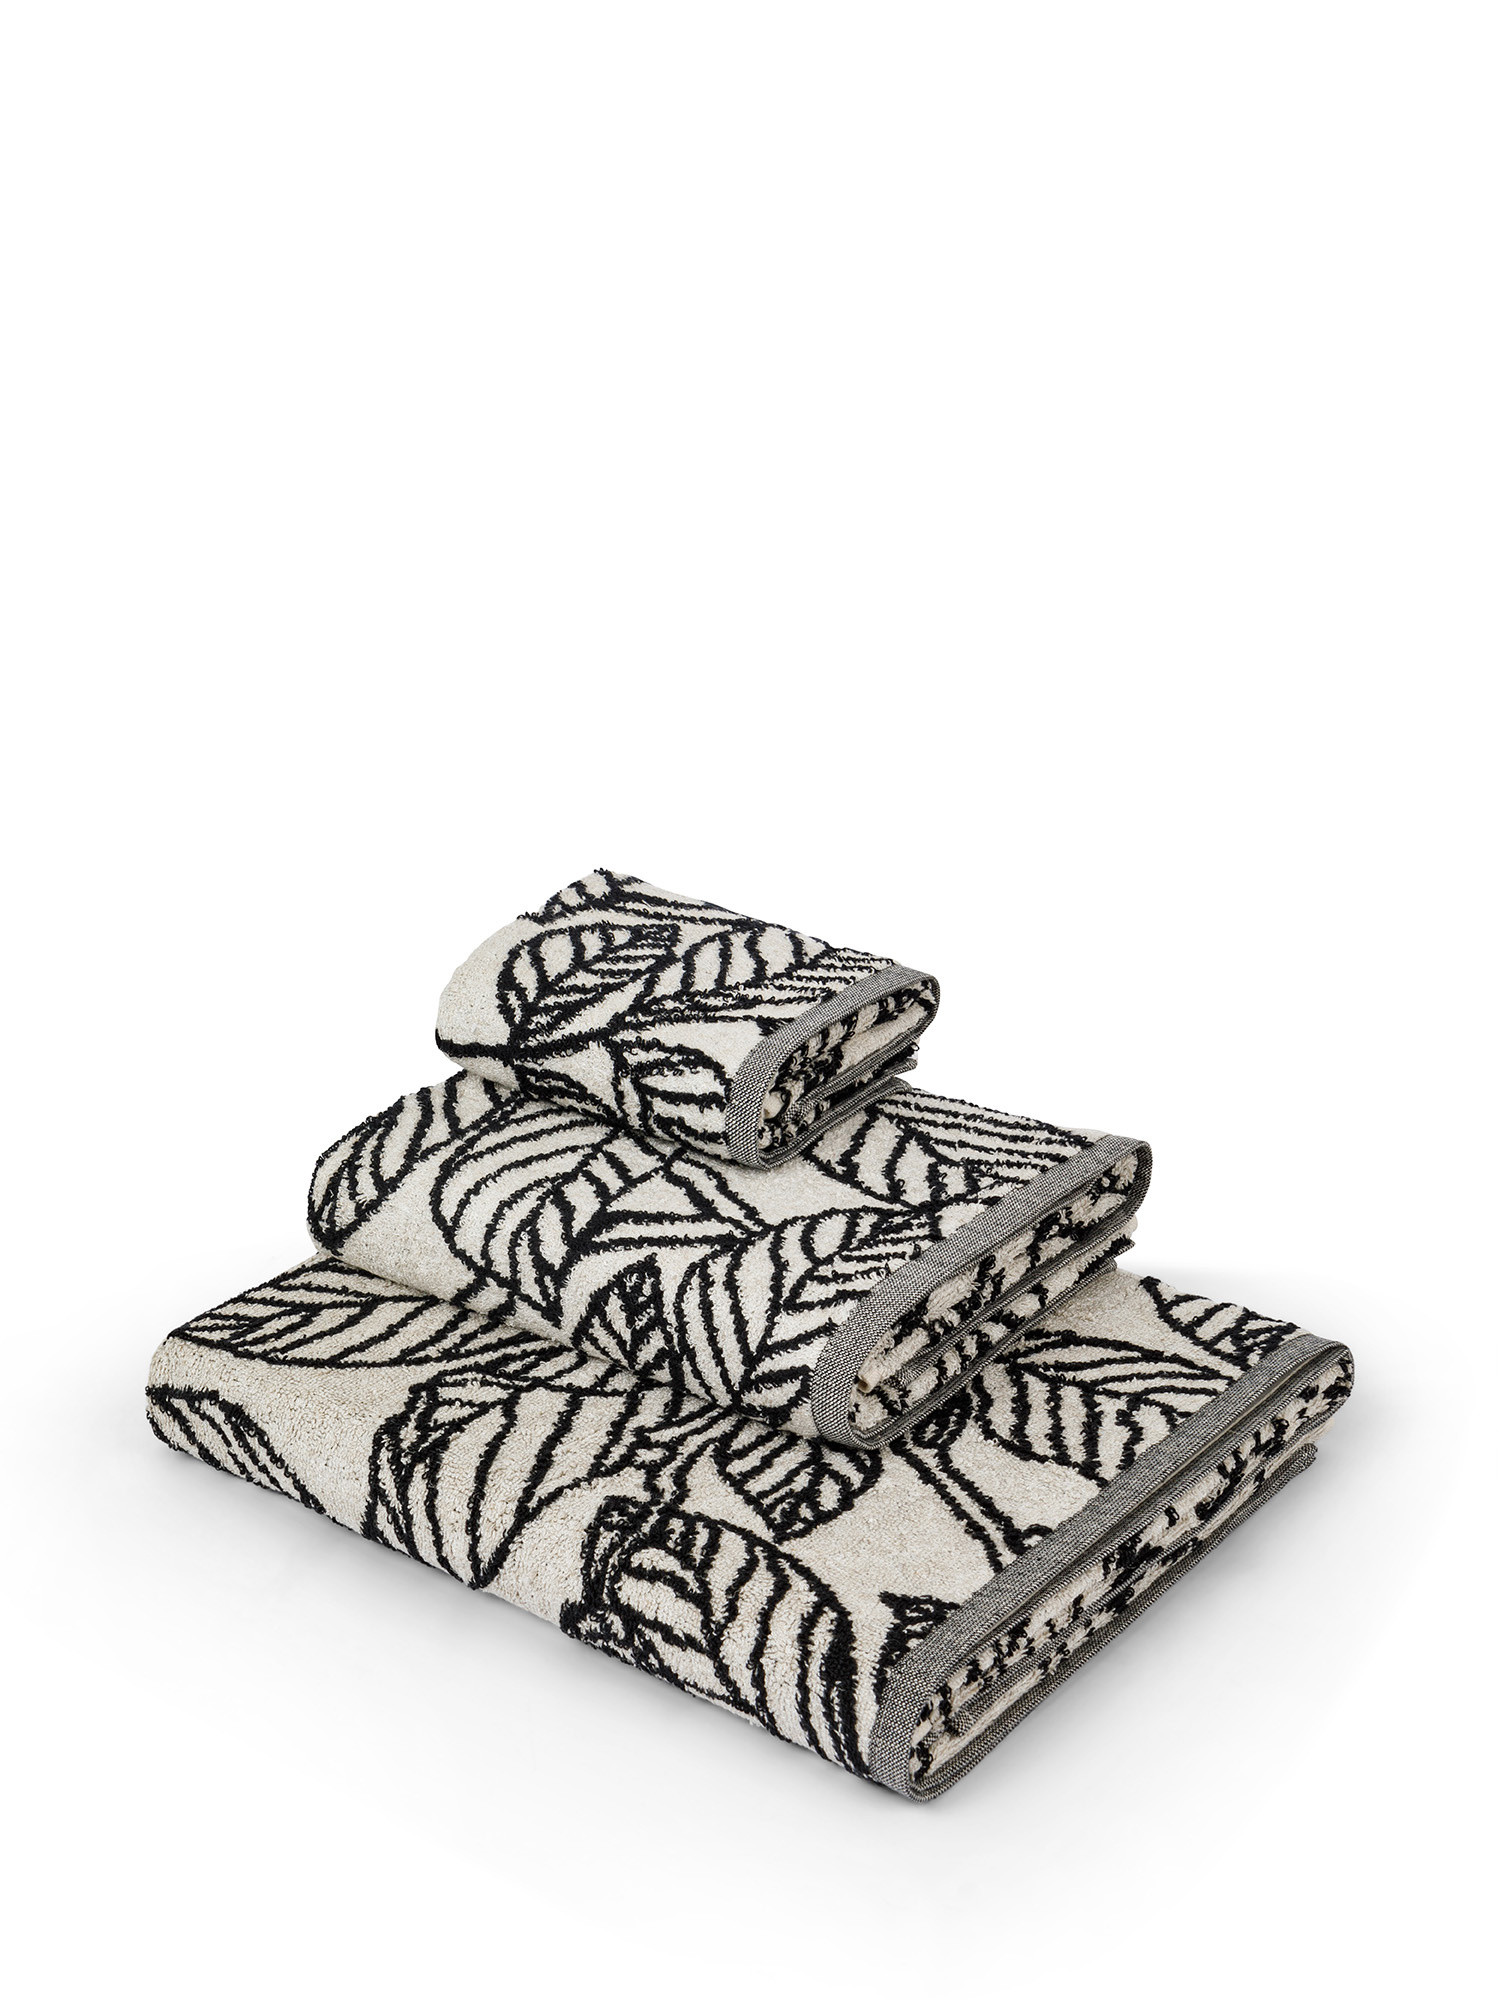 Asciugamano misto lino e cotone motivo foliage, Nero, large image number 0